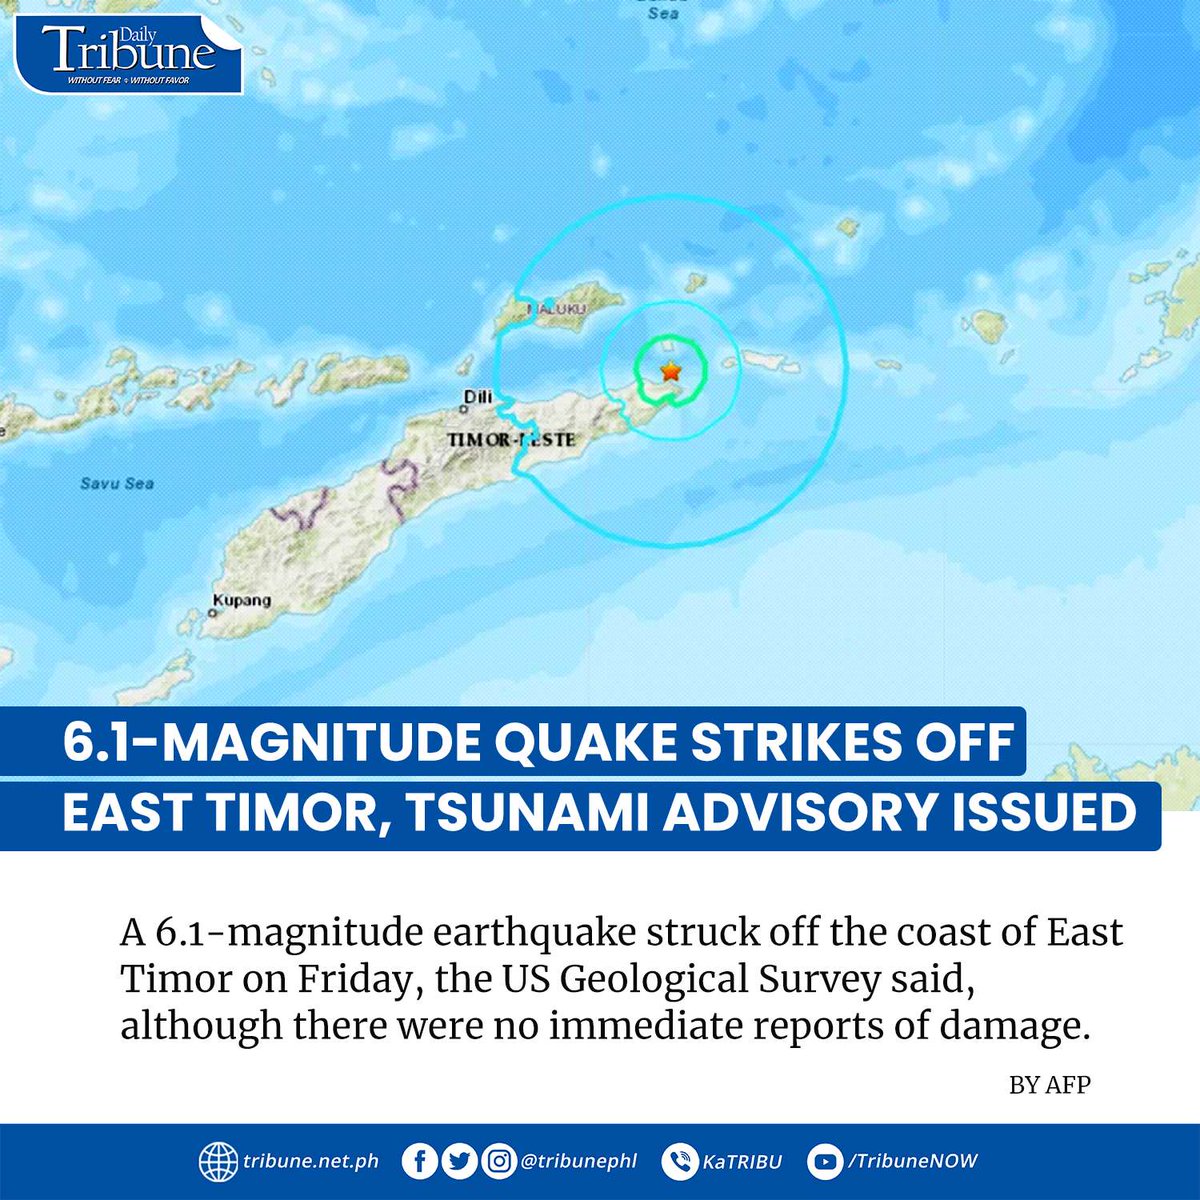 A tsunami advisory group said the quake “may be capable of generating a tsunami affecting the Indian Ocean region”.

Full Story: https://t.co/9qh63CBHXz

#earthquake
#Tsunami 
#DailyTribune https://t.co/aarP5Cwprq